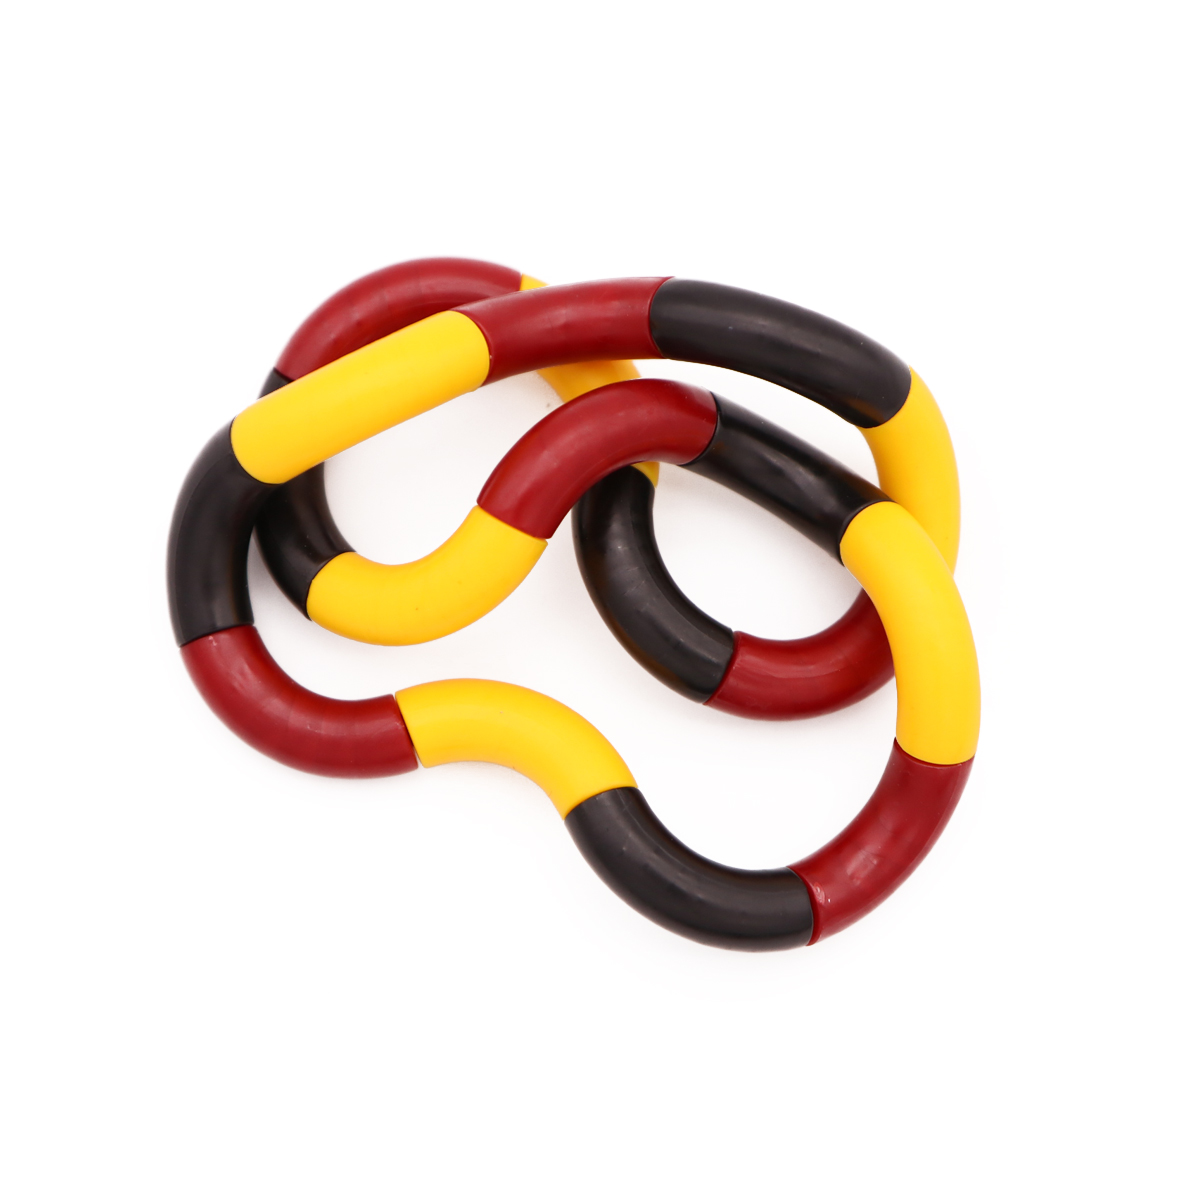 Twister Twist, Fidget Toy - Rood/Geel/Zwart